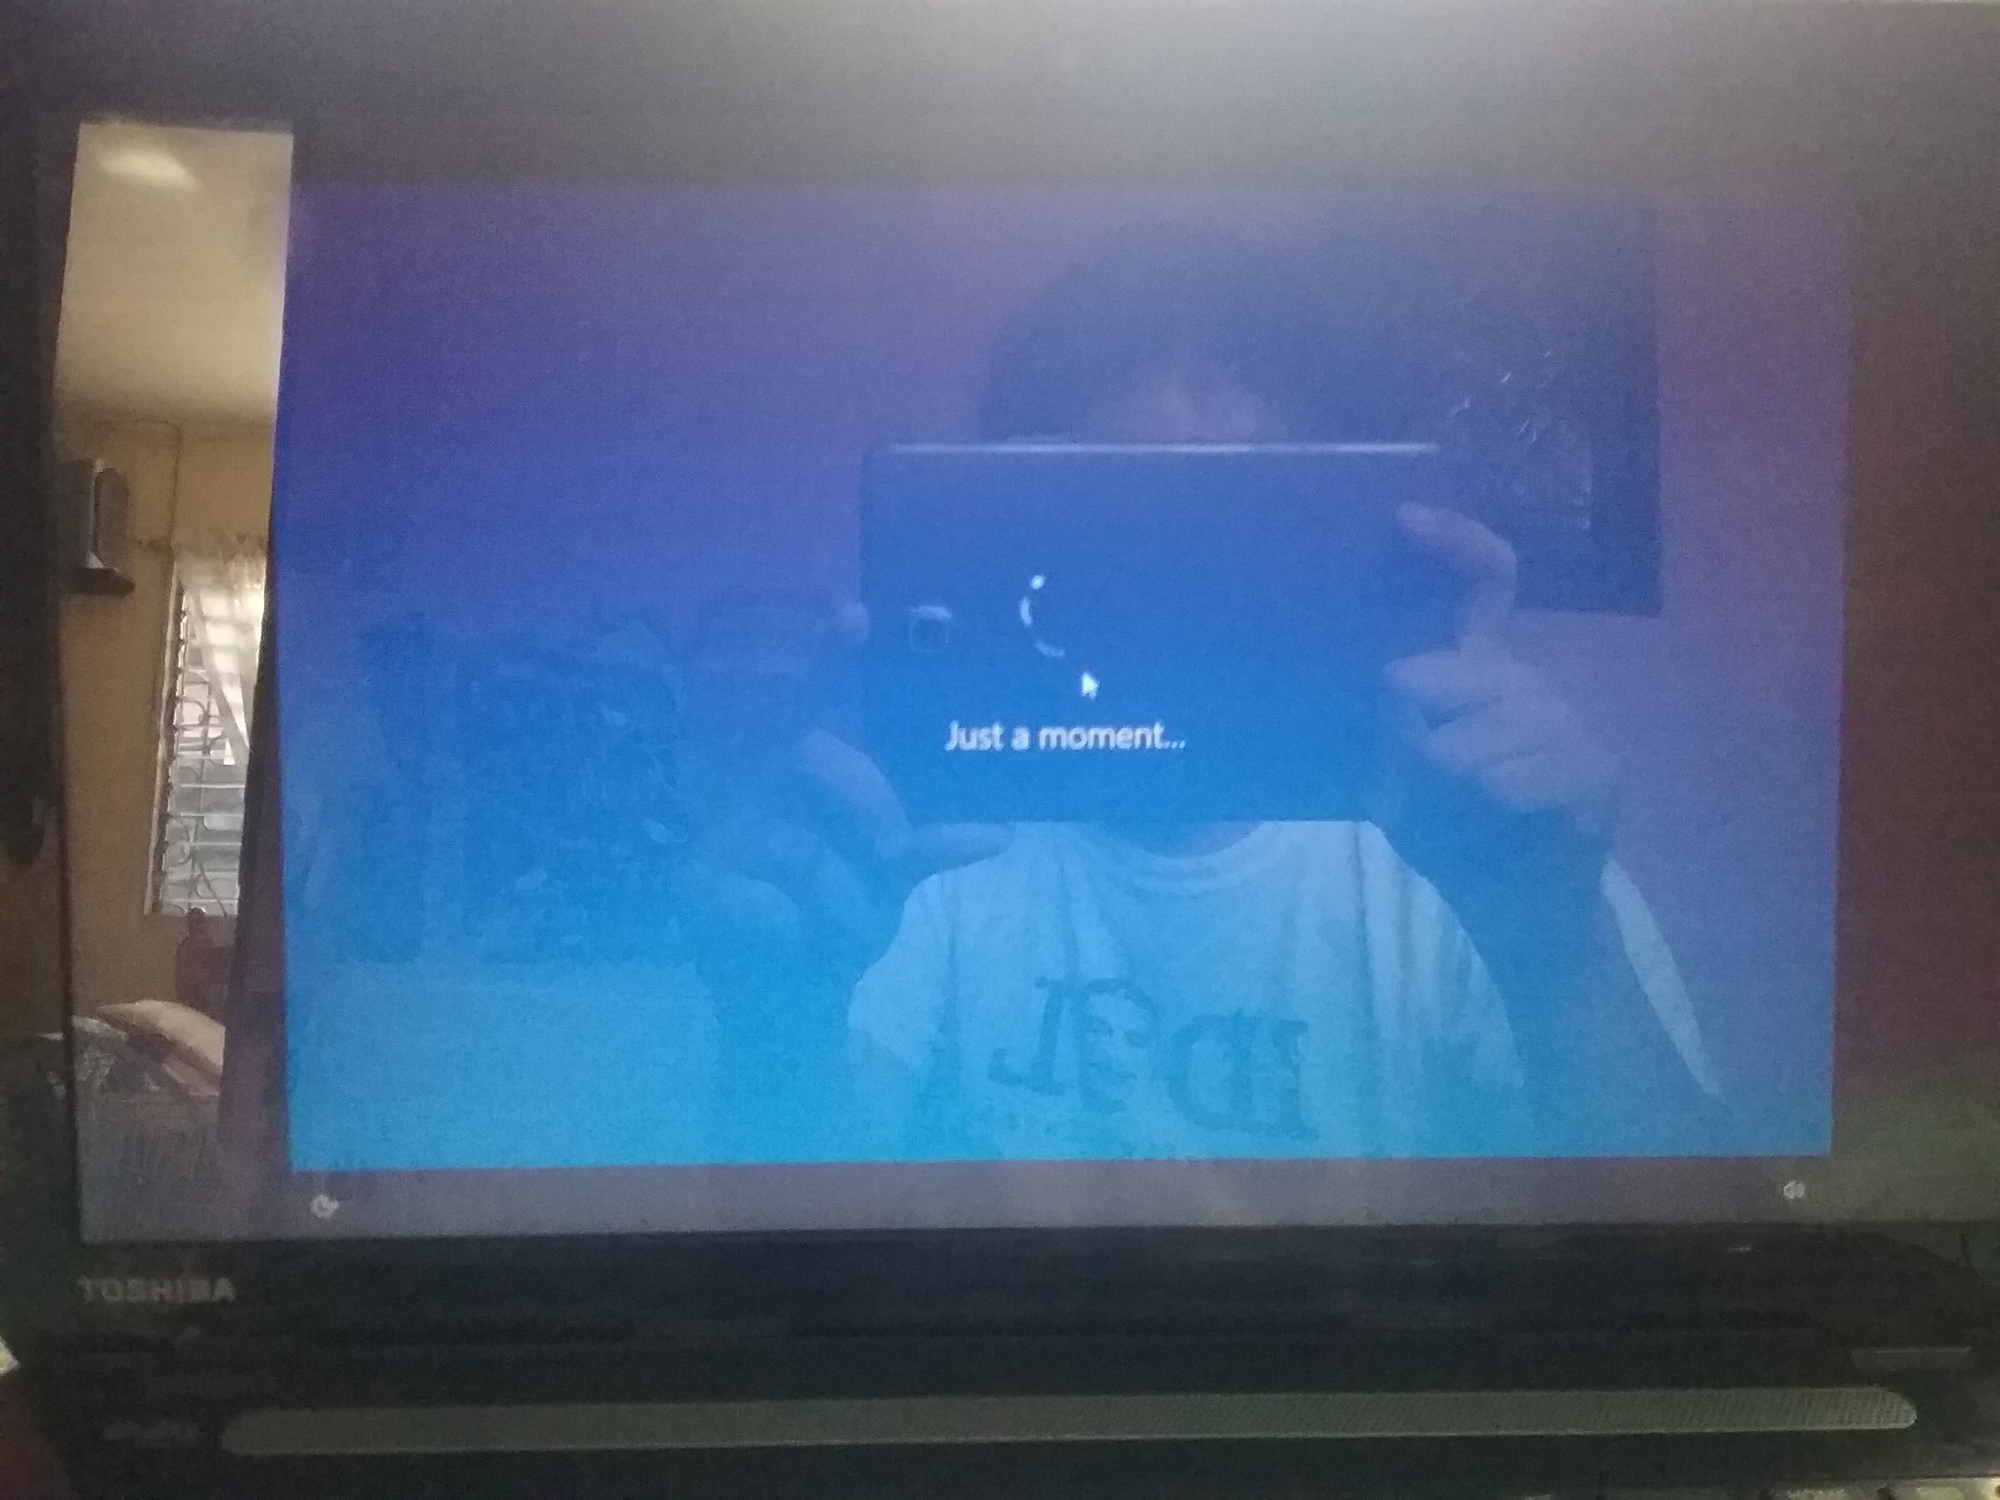 Windows popup before going to desktop ad27d9a4-9655-4dca-867c-bc375bd879dc?upload=true.jpg